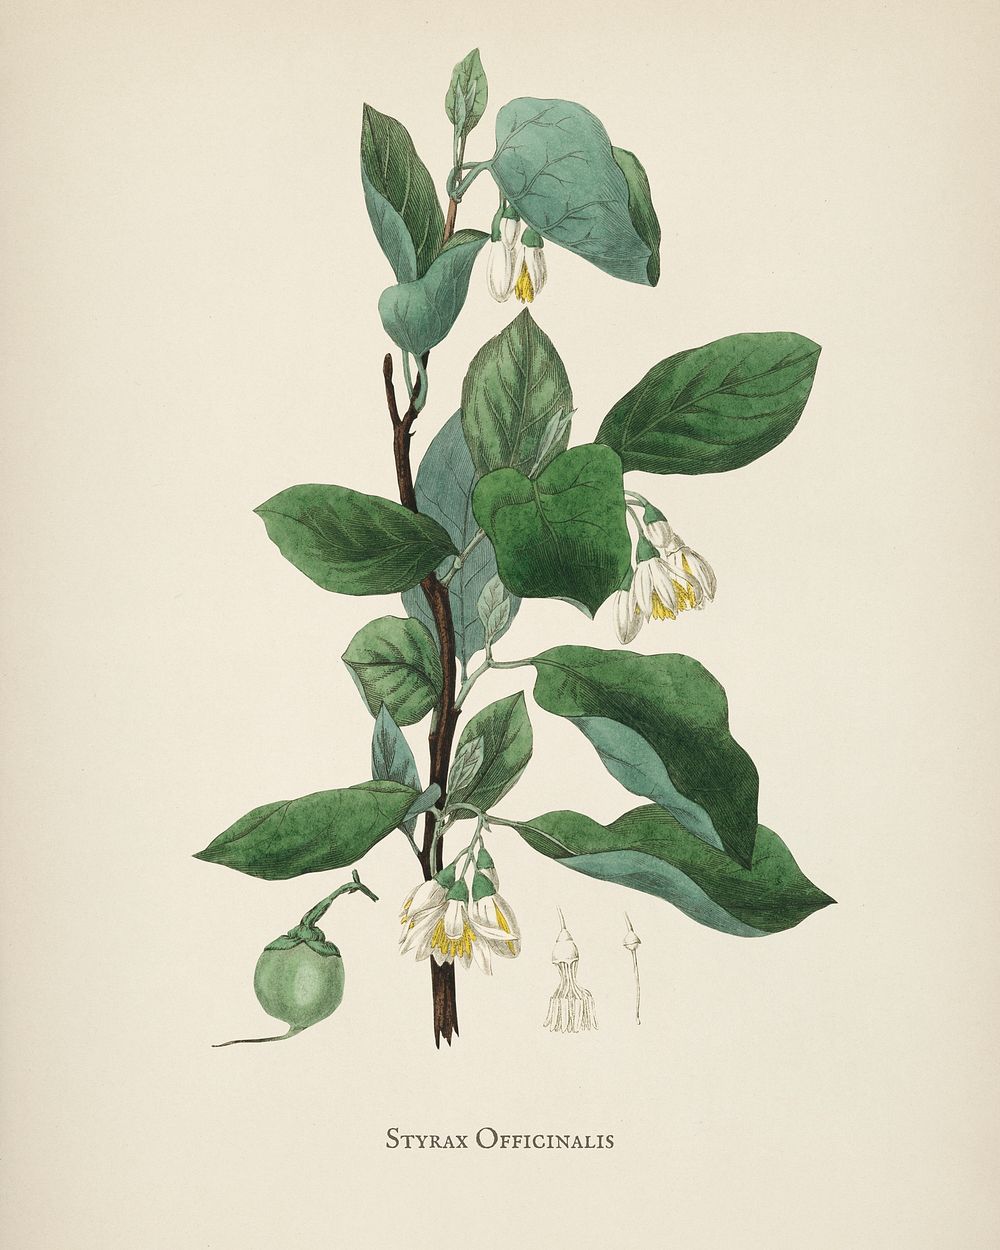 Styrax officinalis illustration from Medical Botany (1836) by John Stephenson and James Morss Churchill.